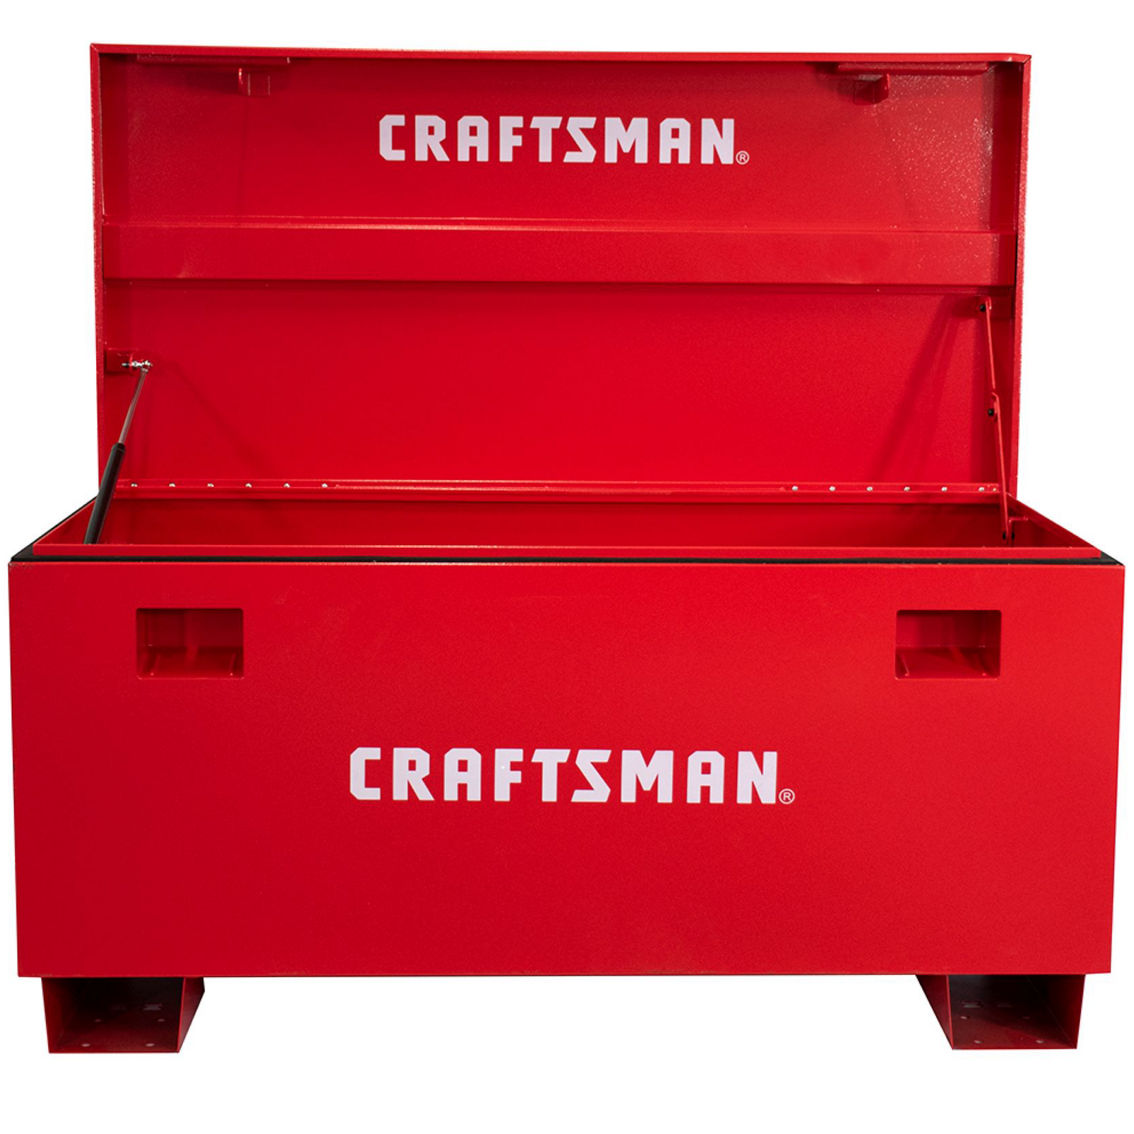 Craftsman 48 in. Jobsite Box - Image 4 of 9